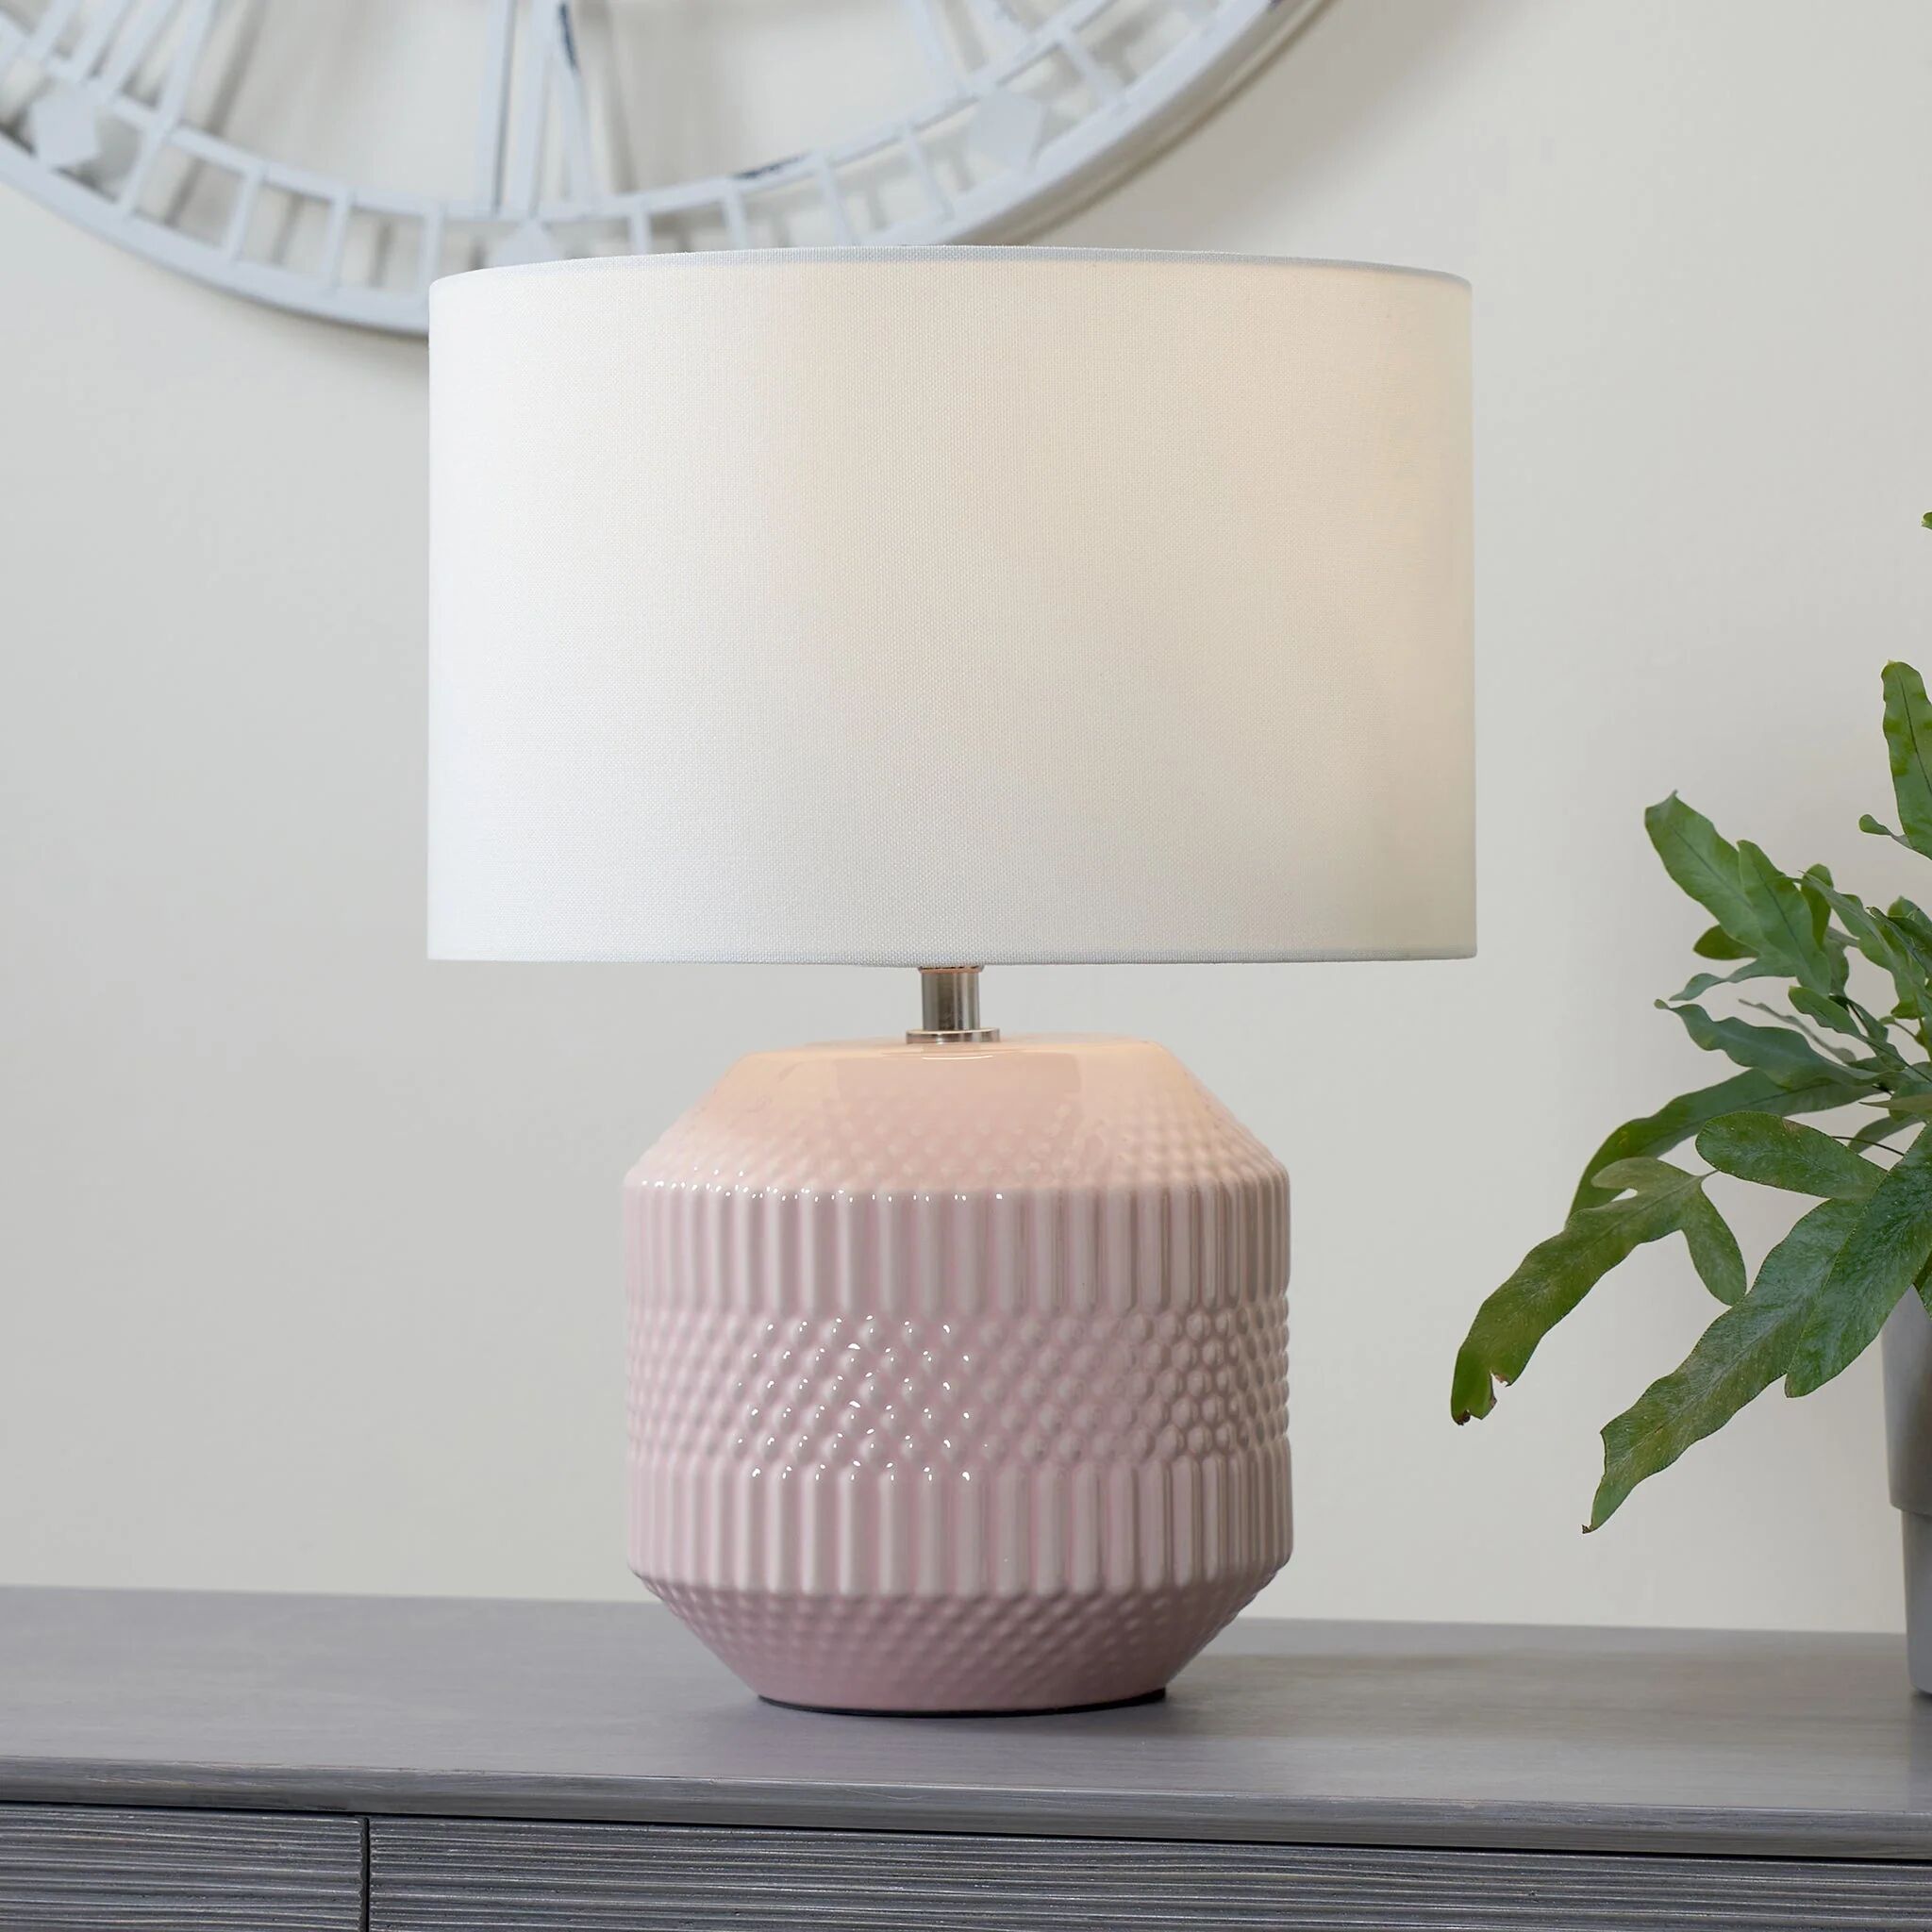 Photos - Desk Lamp Meribel Geo Textured Ceramic Table Lamp in Pink